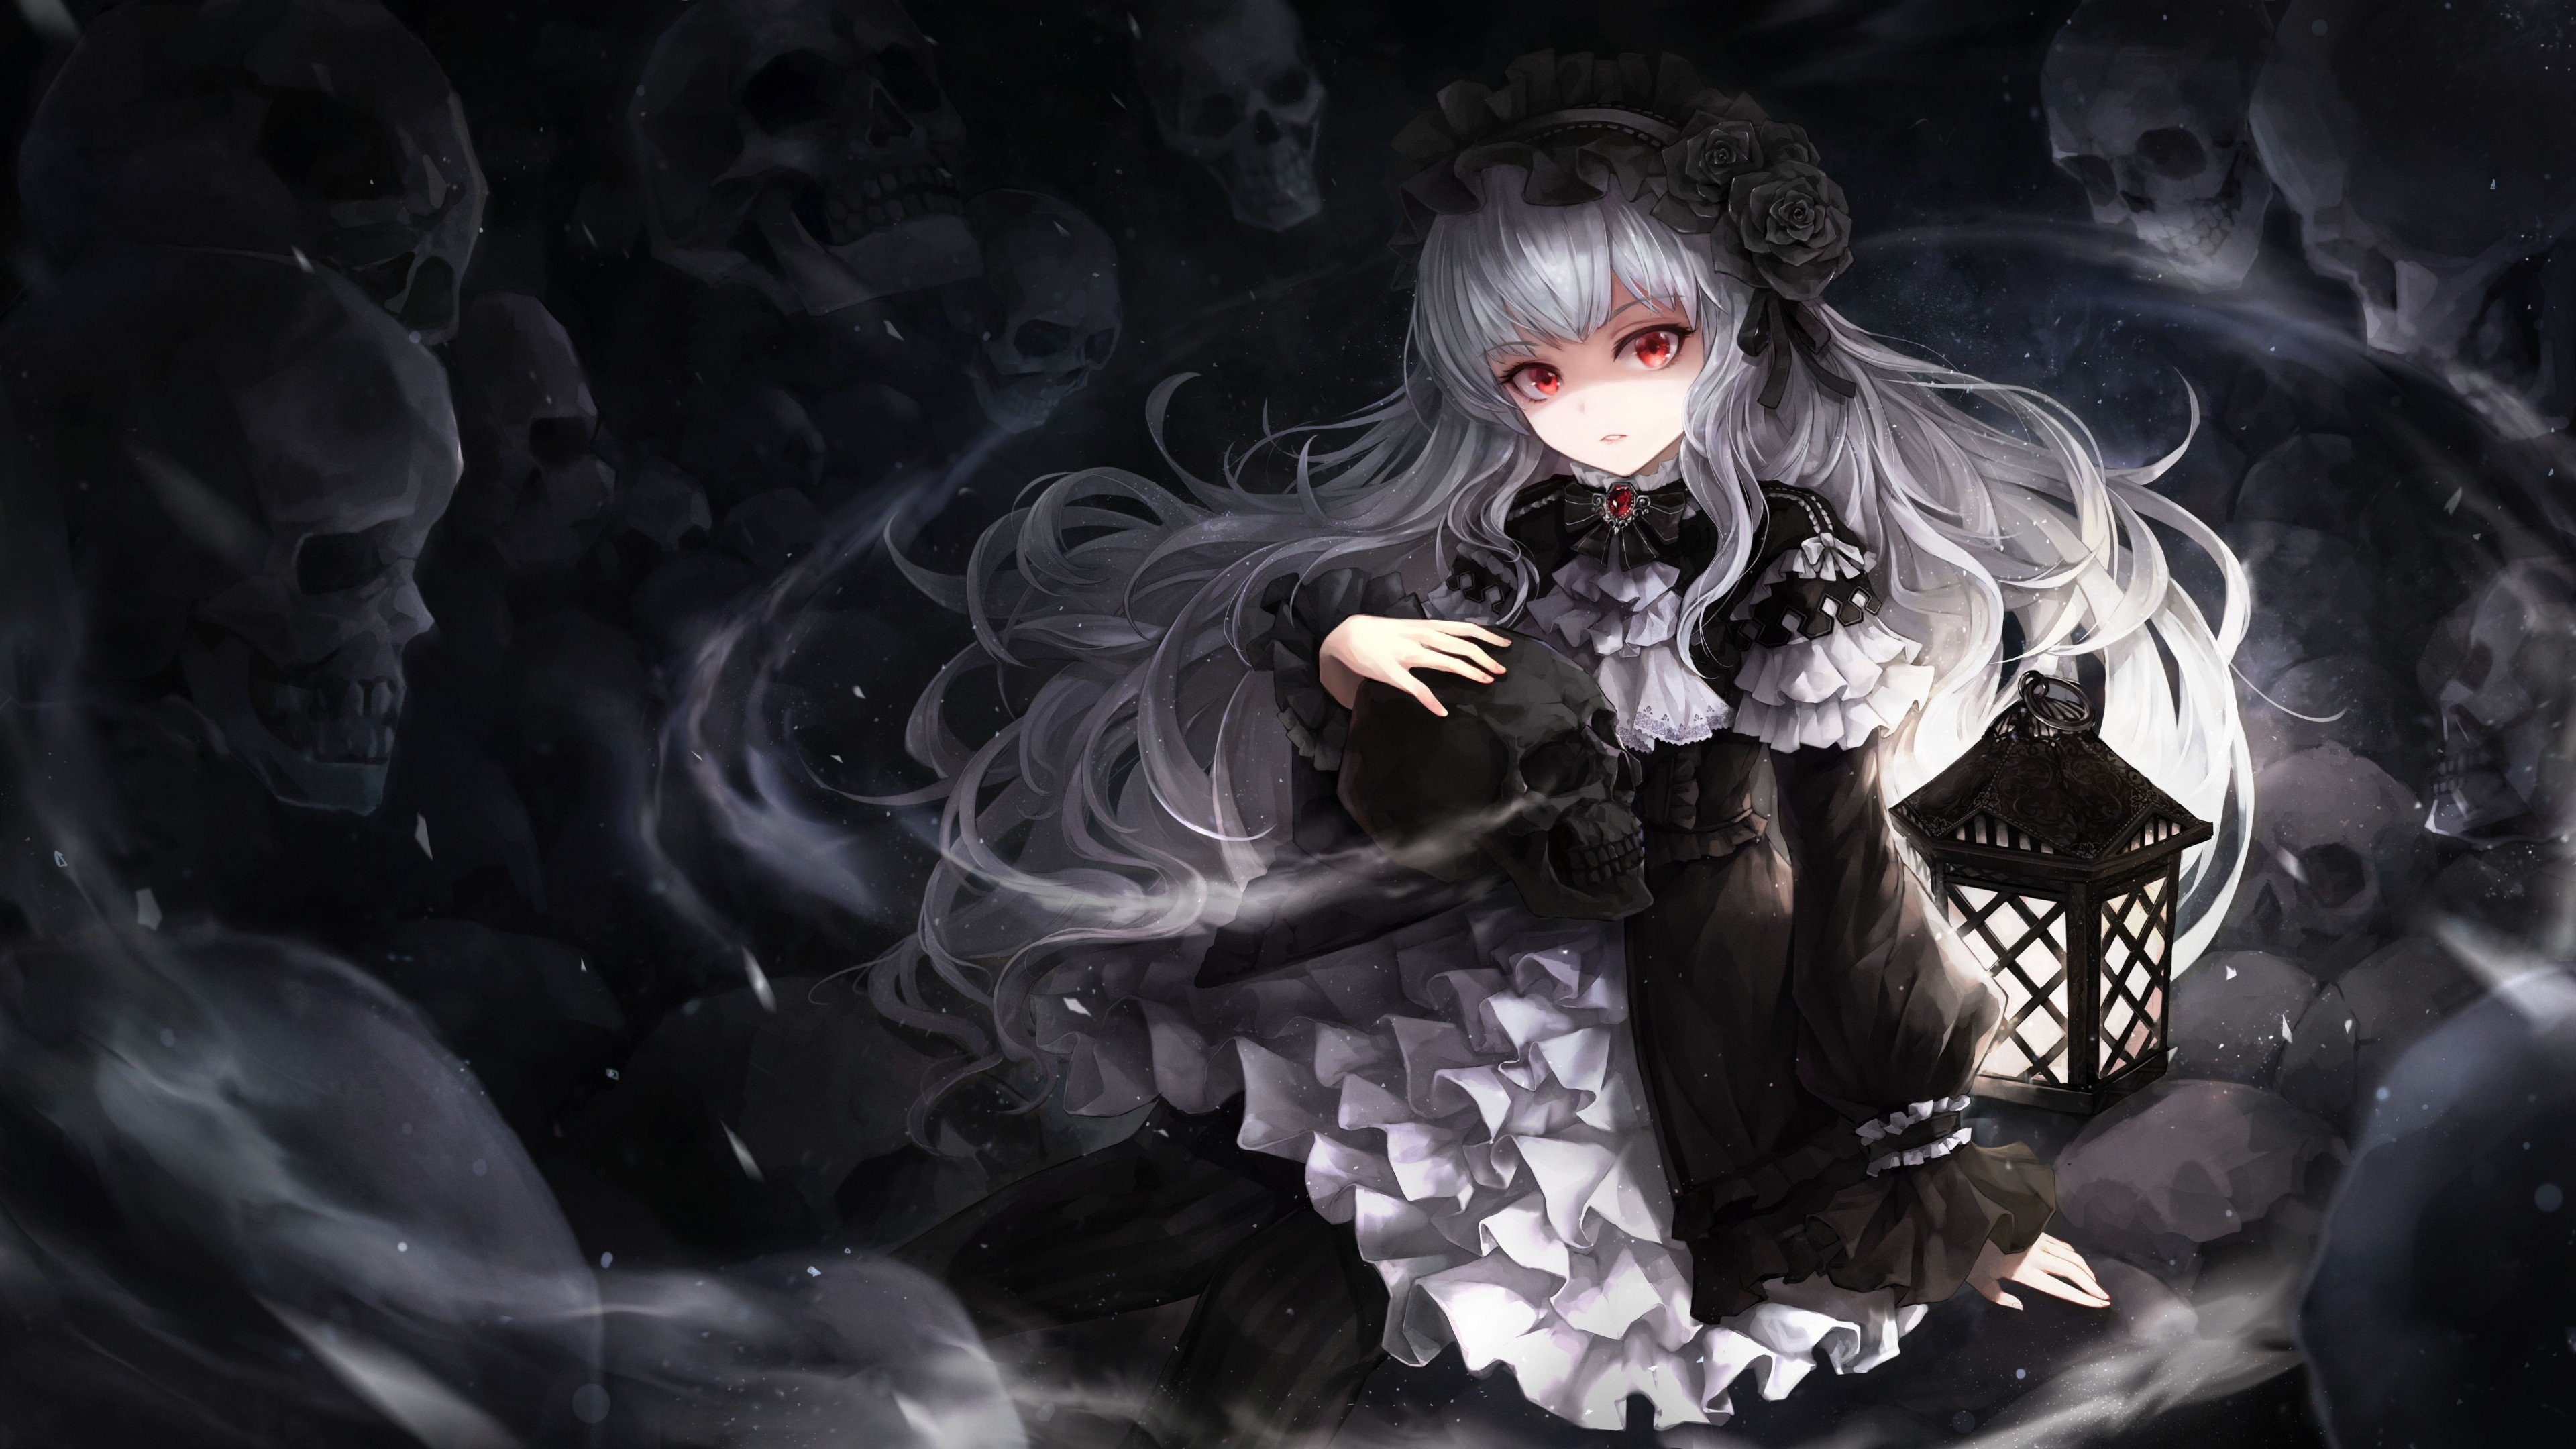 Gothic Anime: Dark art, Girl with sculls, Lantern, Mystic, Ominously, Death. 3840x2160 4K Wallpaper.